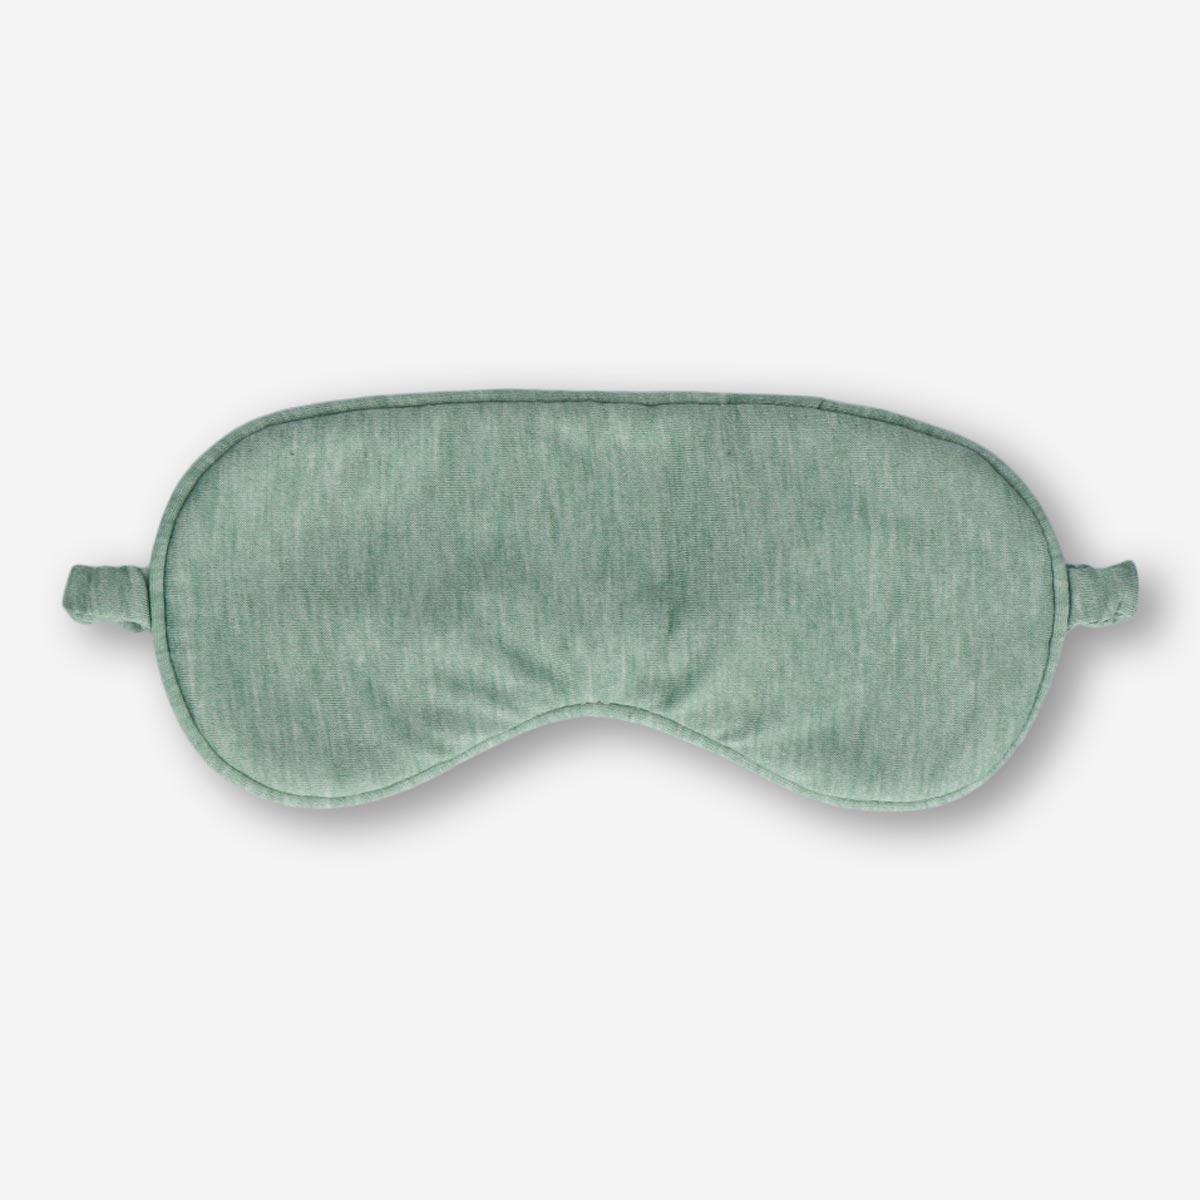 Green soft sleeping mask